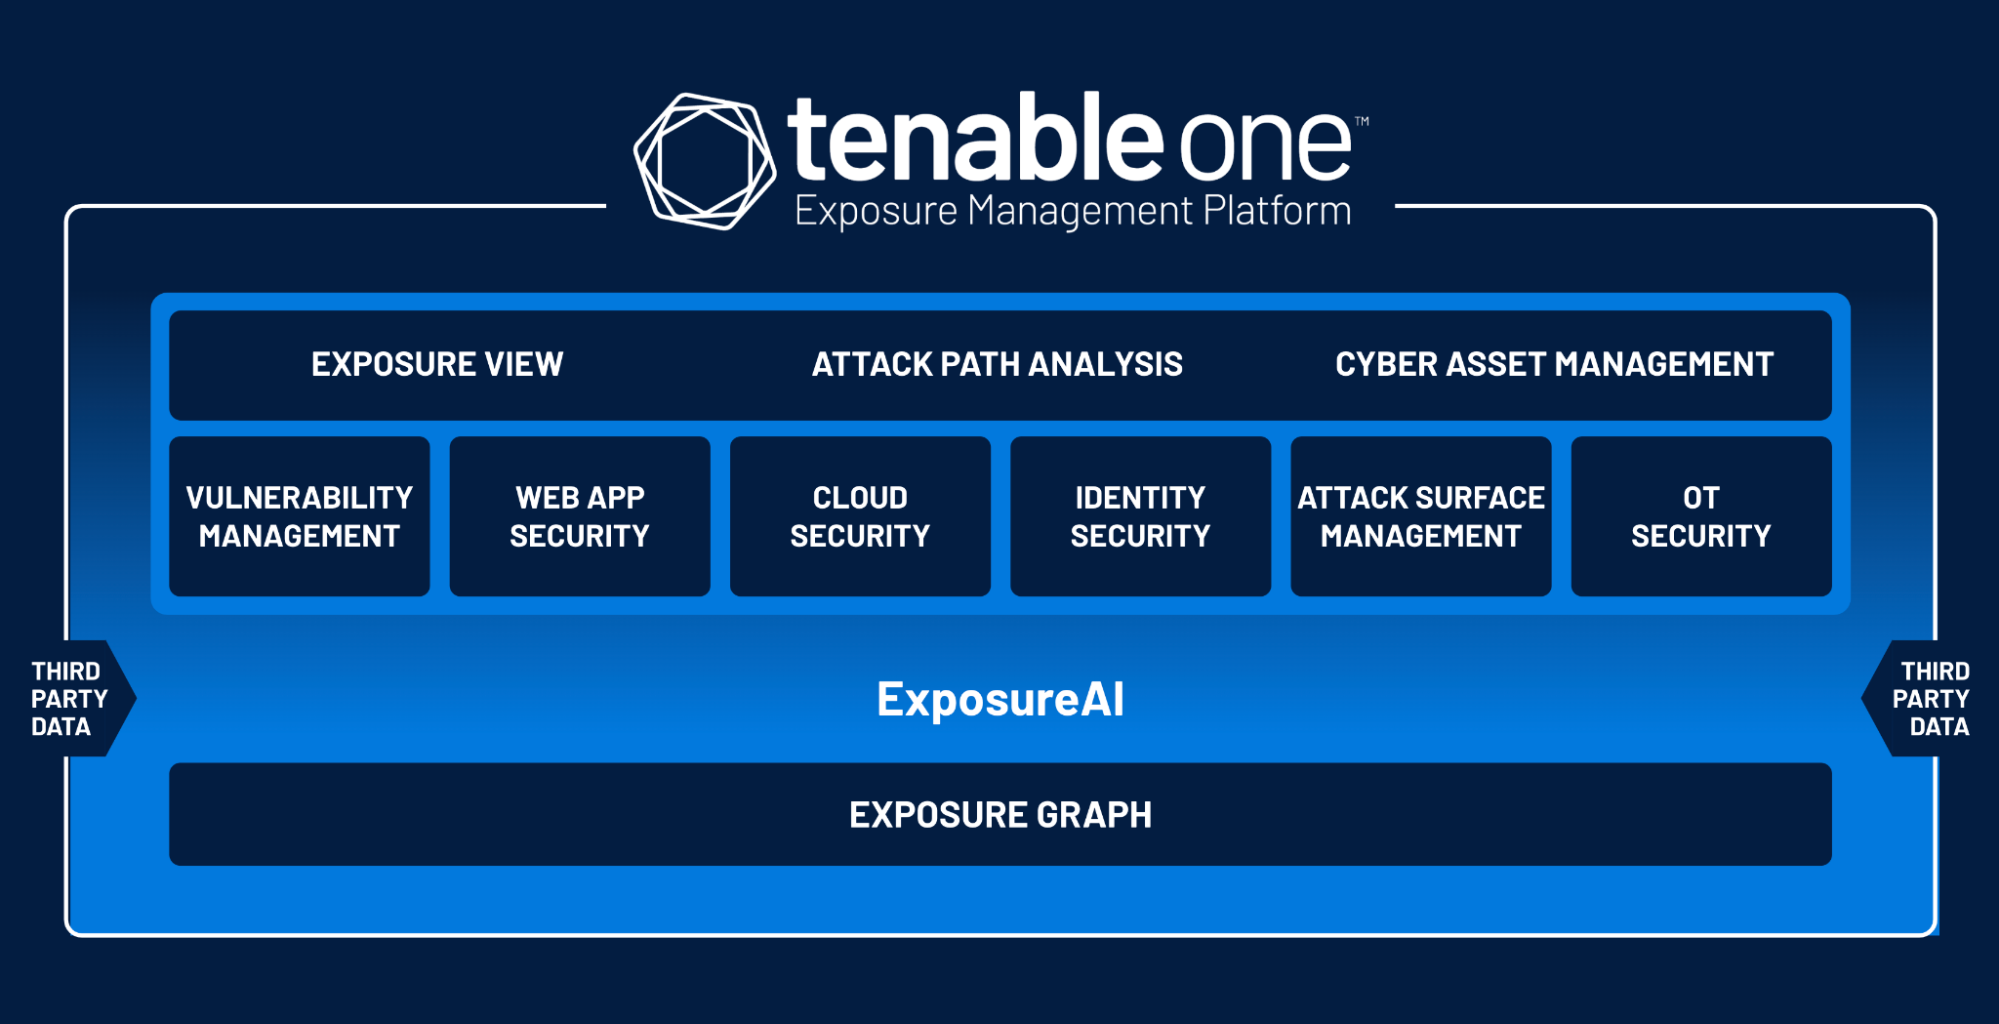 Tenable One Exposure Management Platform